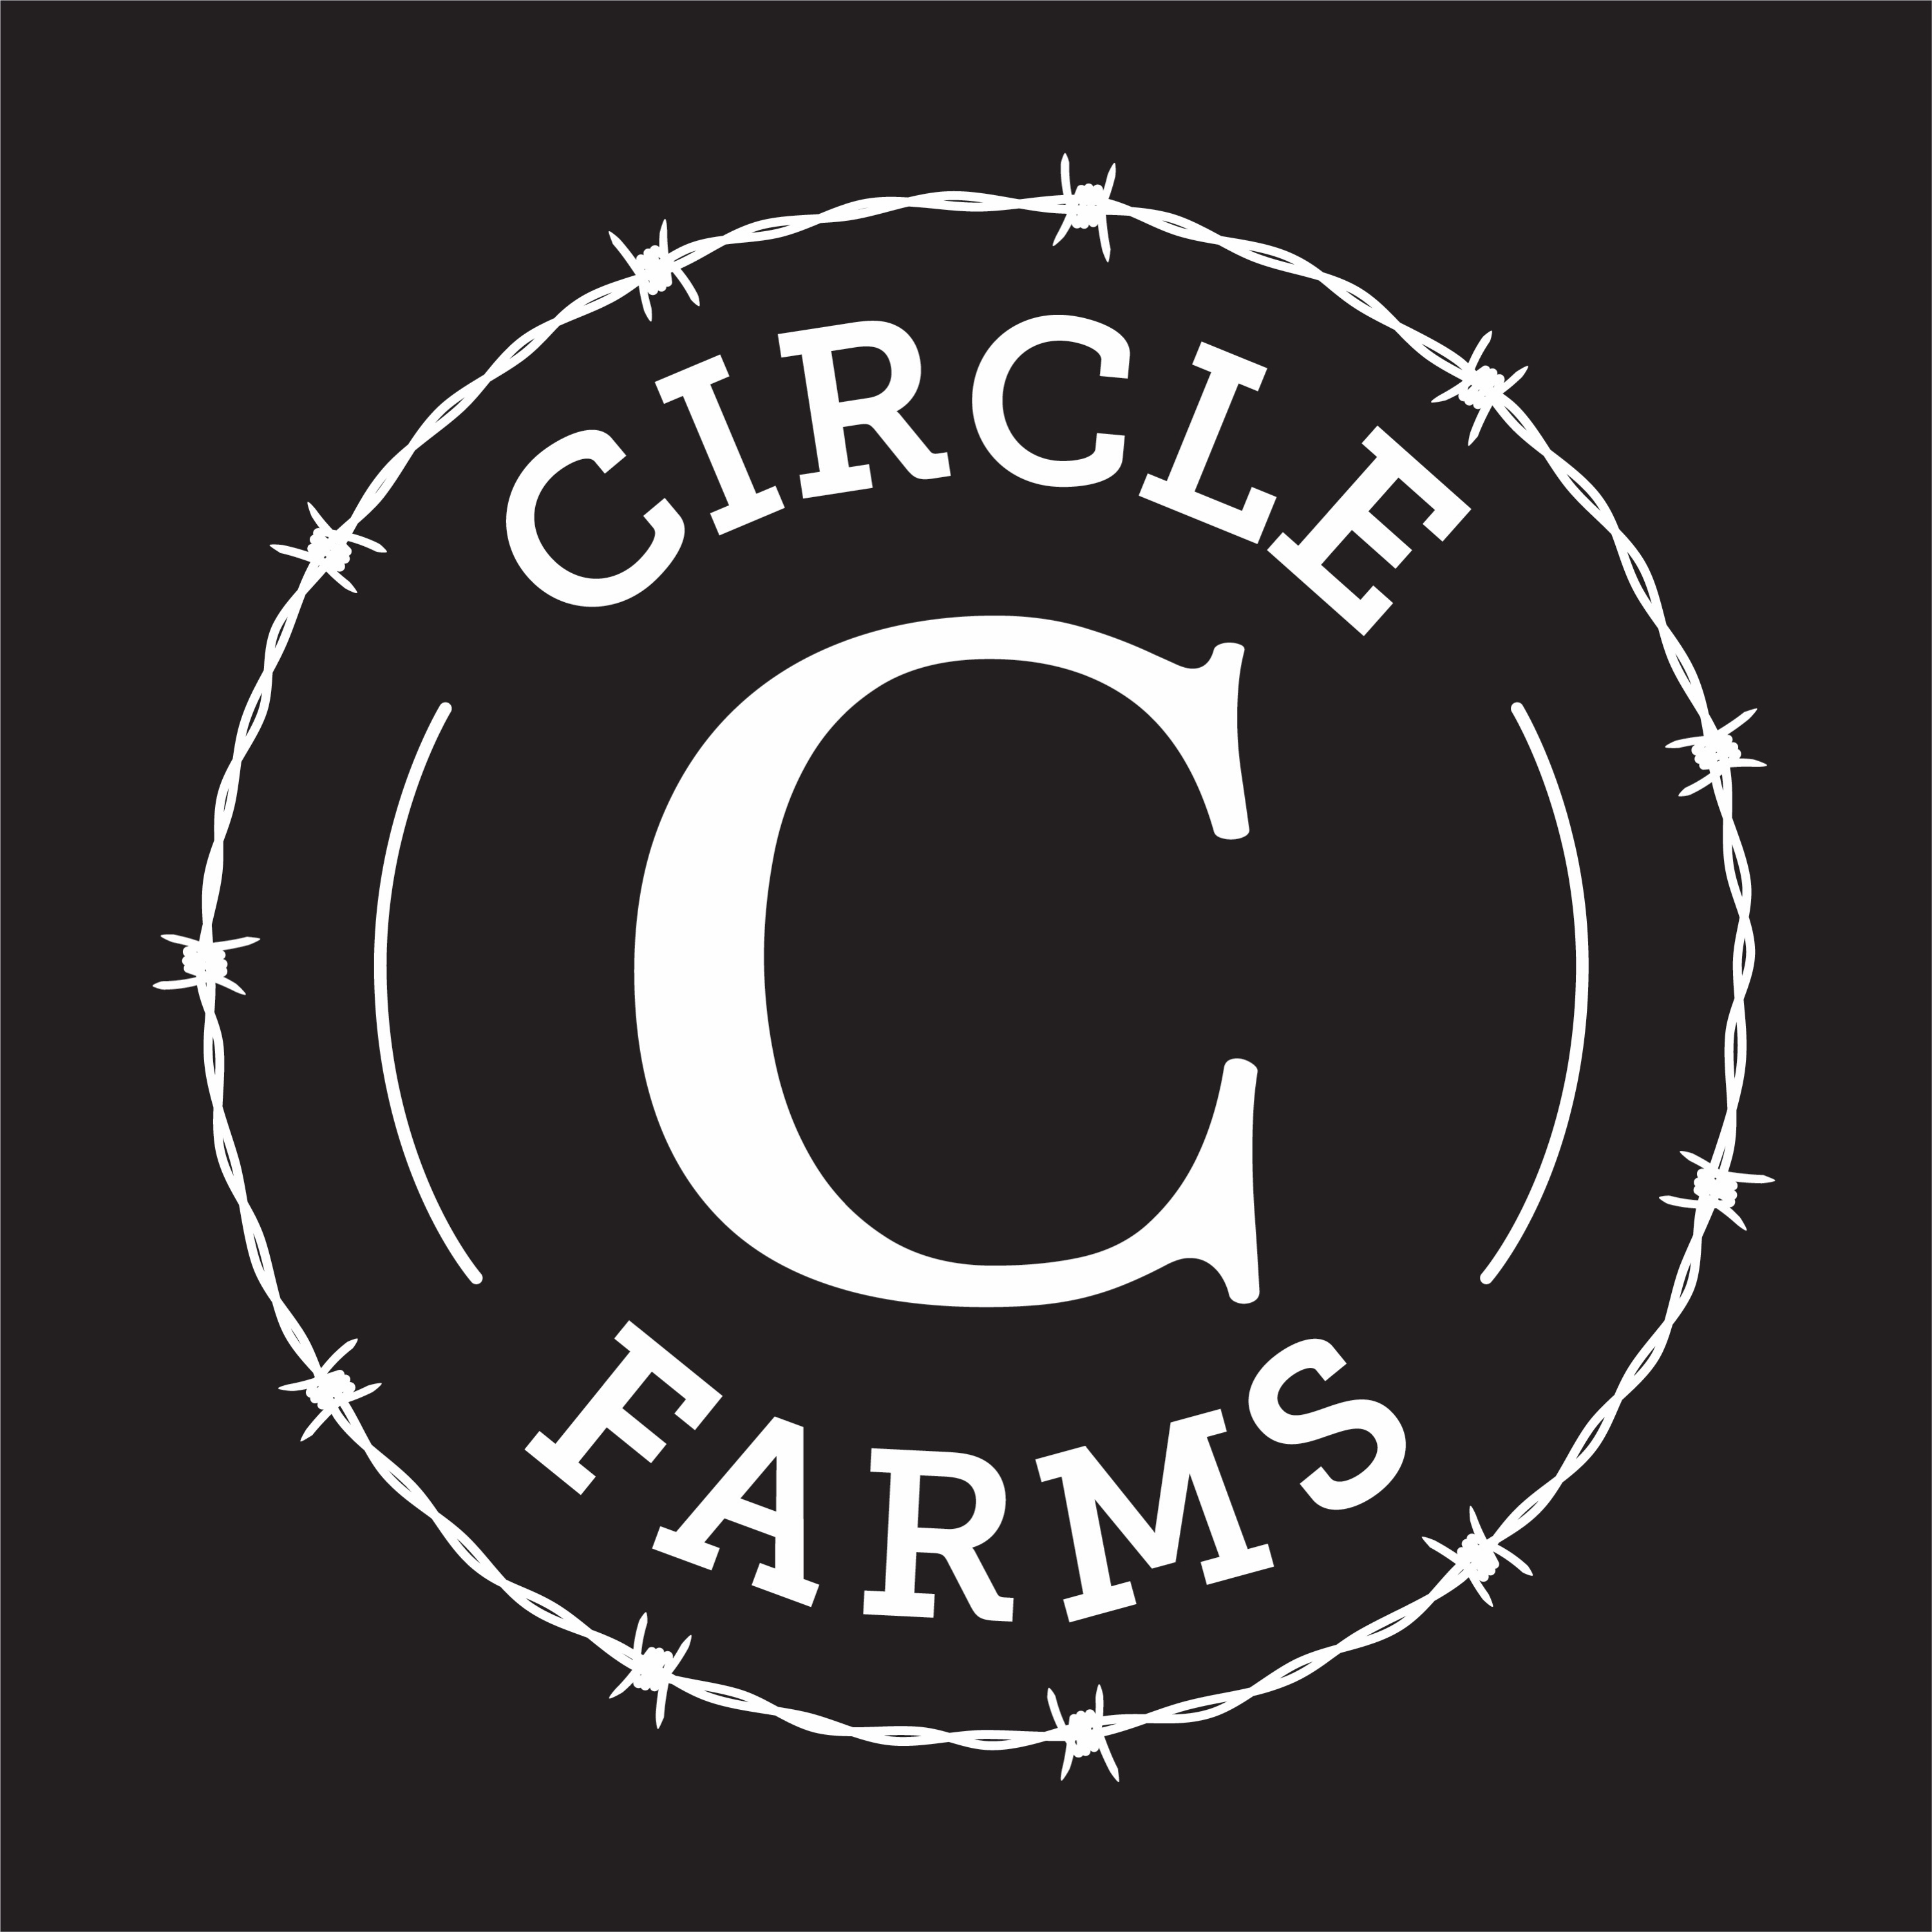 Circle C Farms Logo